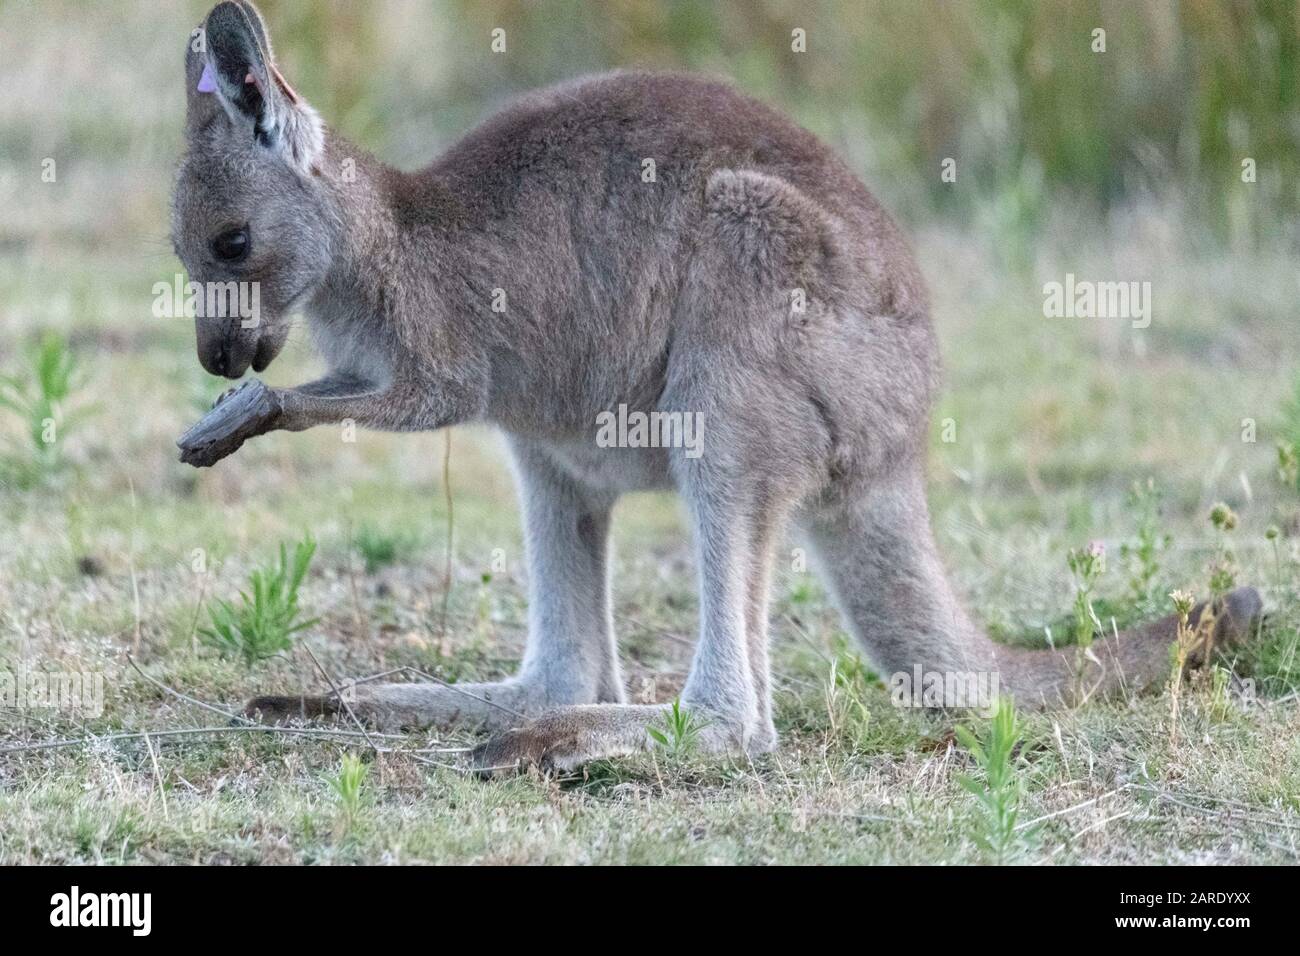 Film Look Photo of Kangaroo. Film grain Look Stock Photo